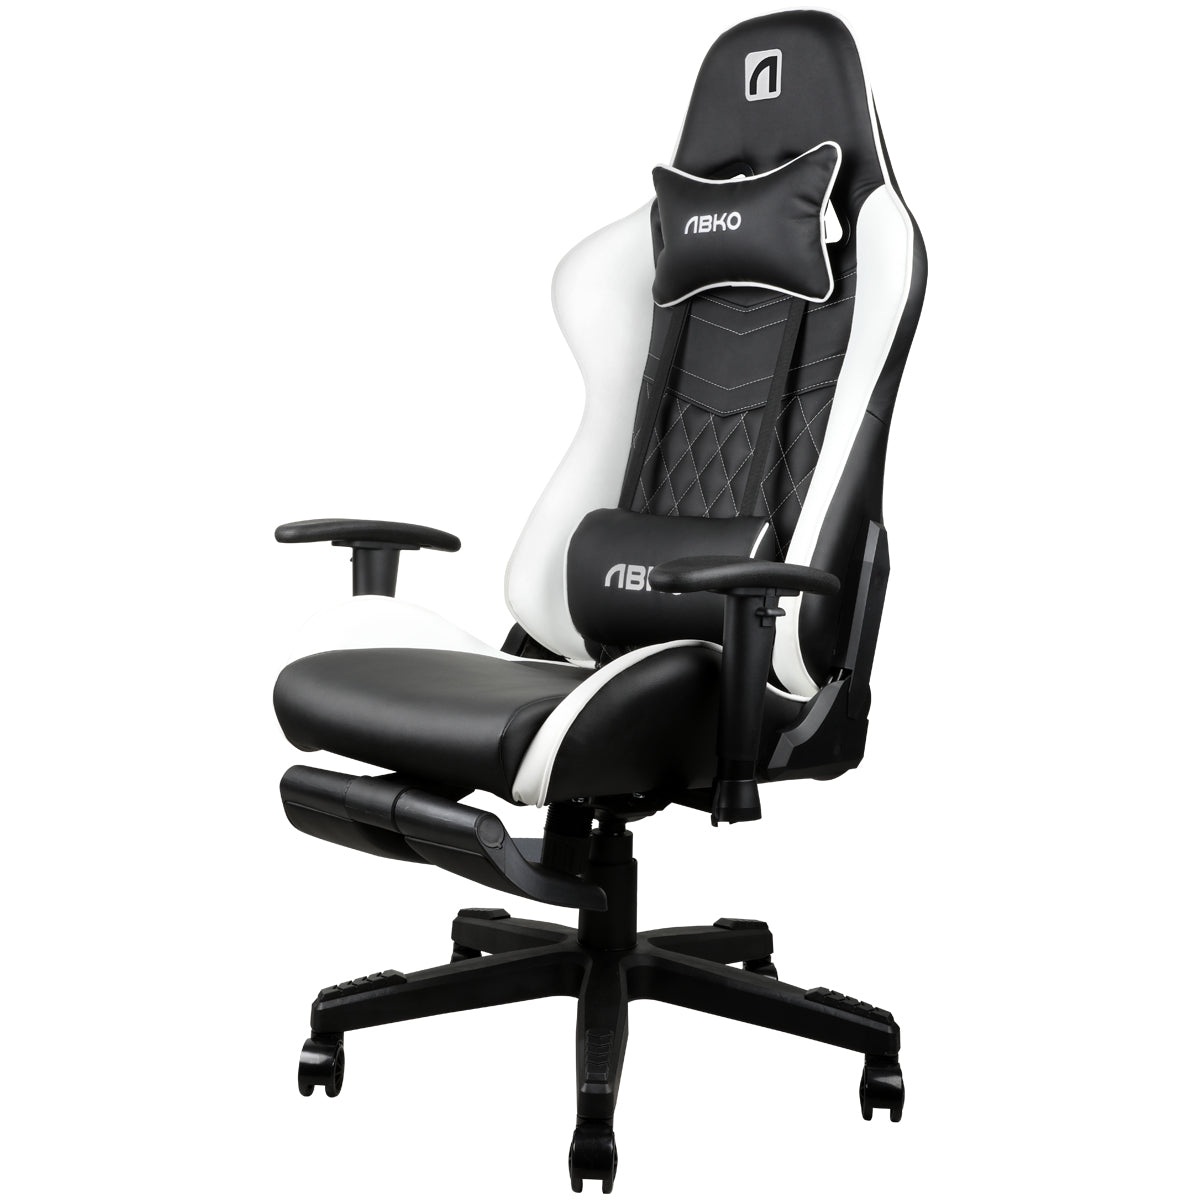 ABKO AGC21 韓國 Gaming Chair 電競椅 連腳托 遊戲扶手椅 高背椅 Armchair 辨公室座椅 大班椅